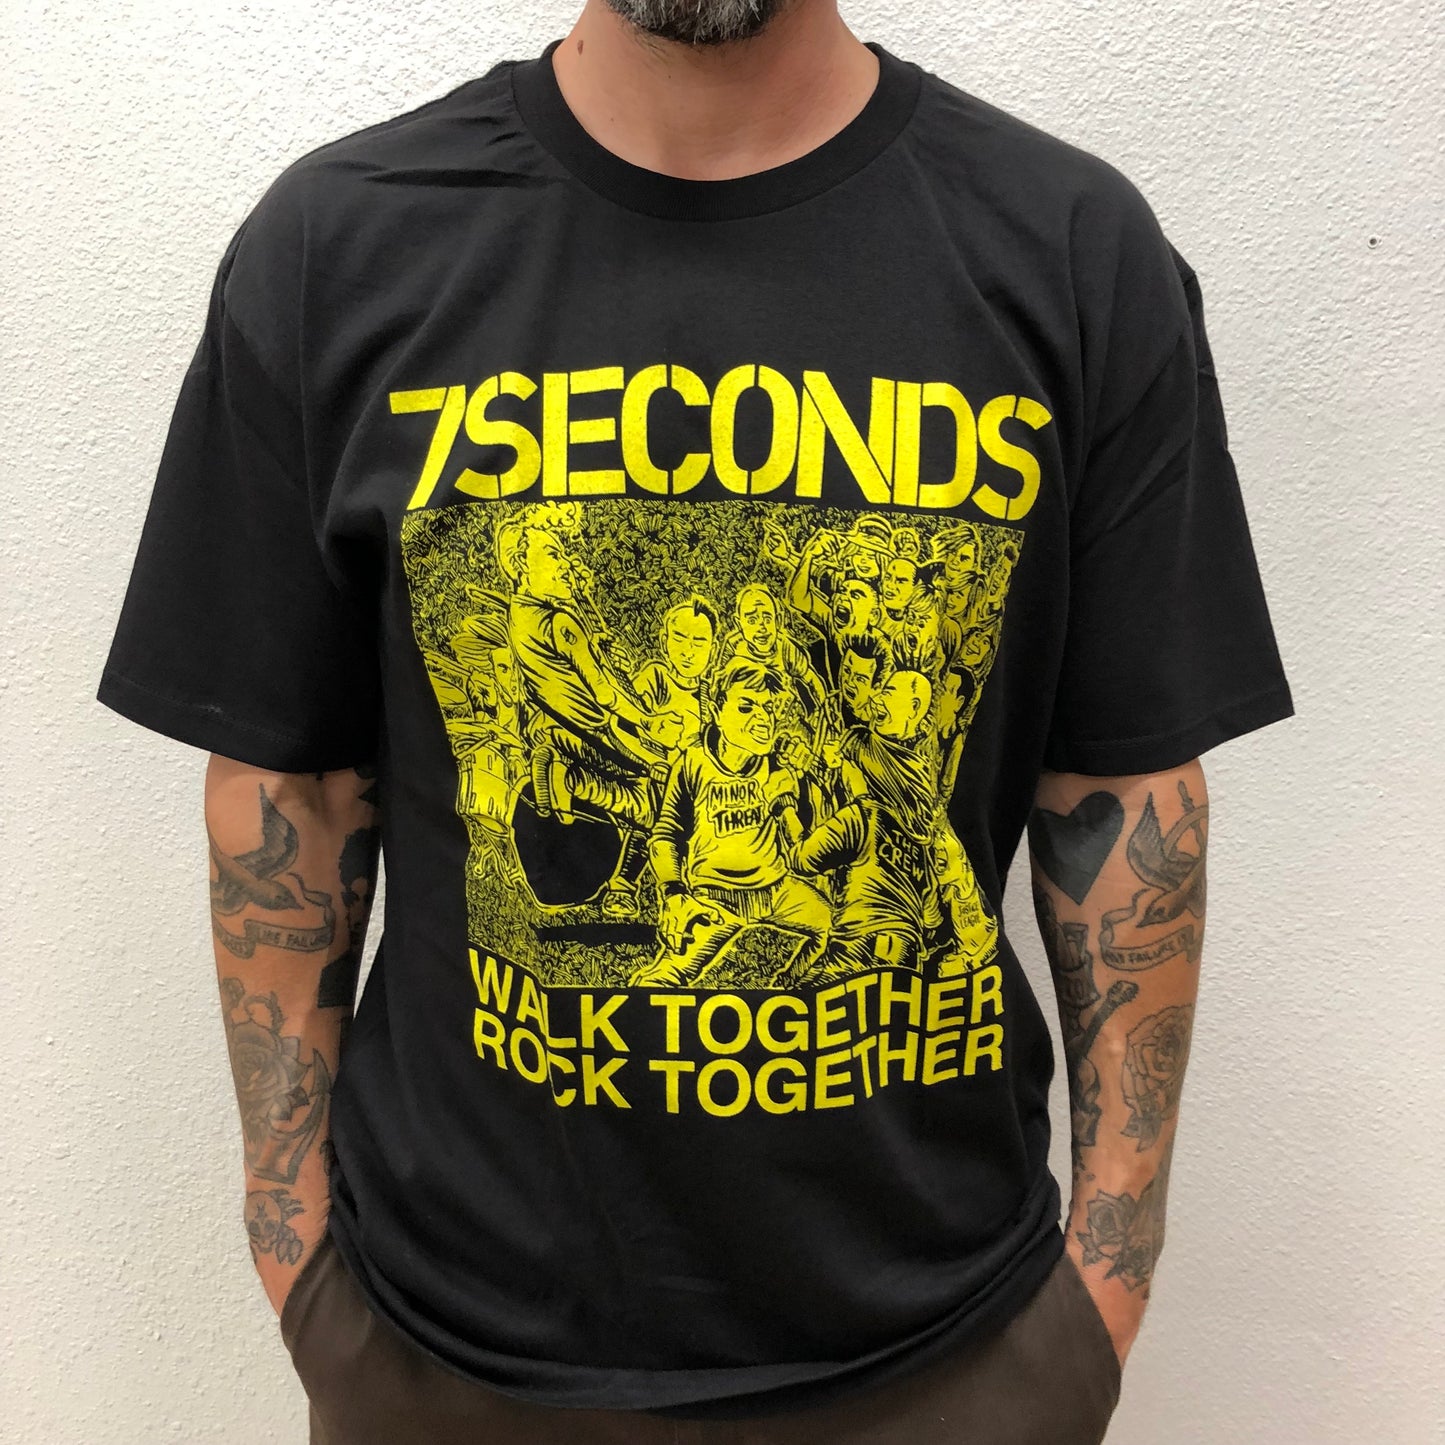 7 Seconds T-Shirt - Walk Together